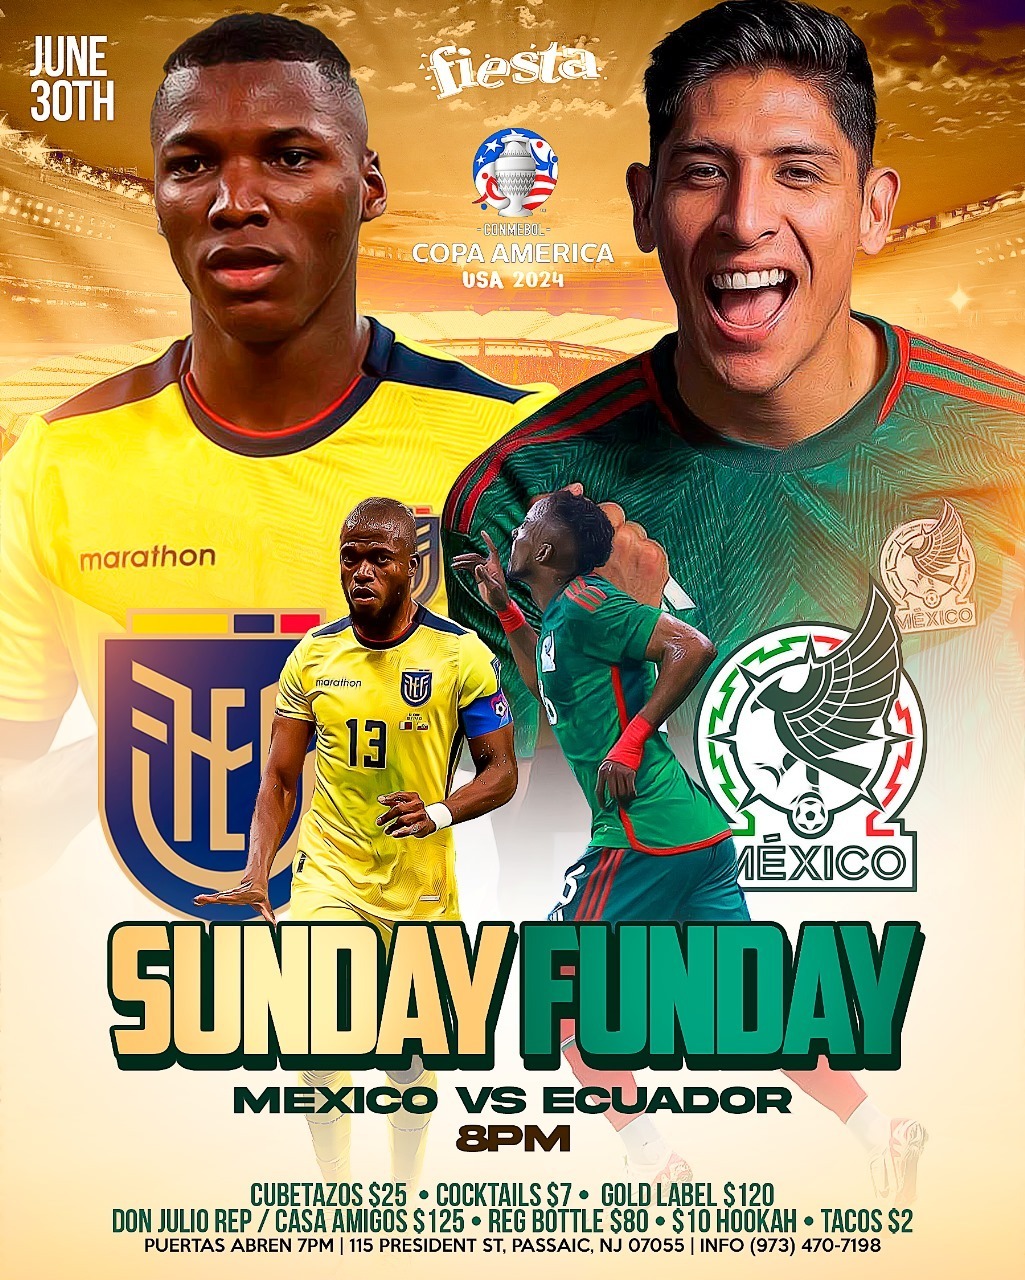 SUNDAY FUNDAY, MEXICO VS. ECUADOR